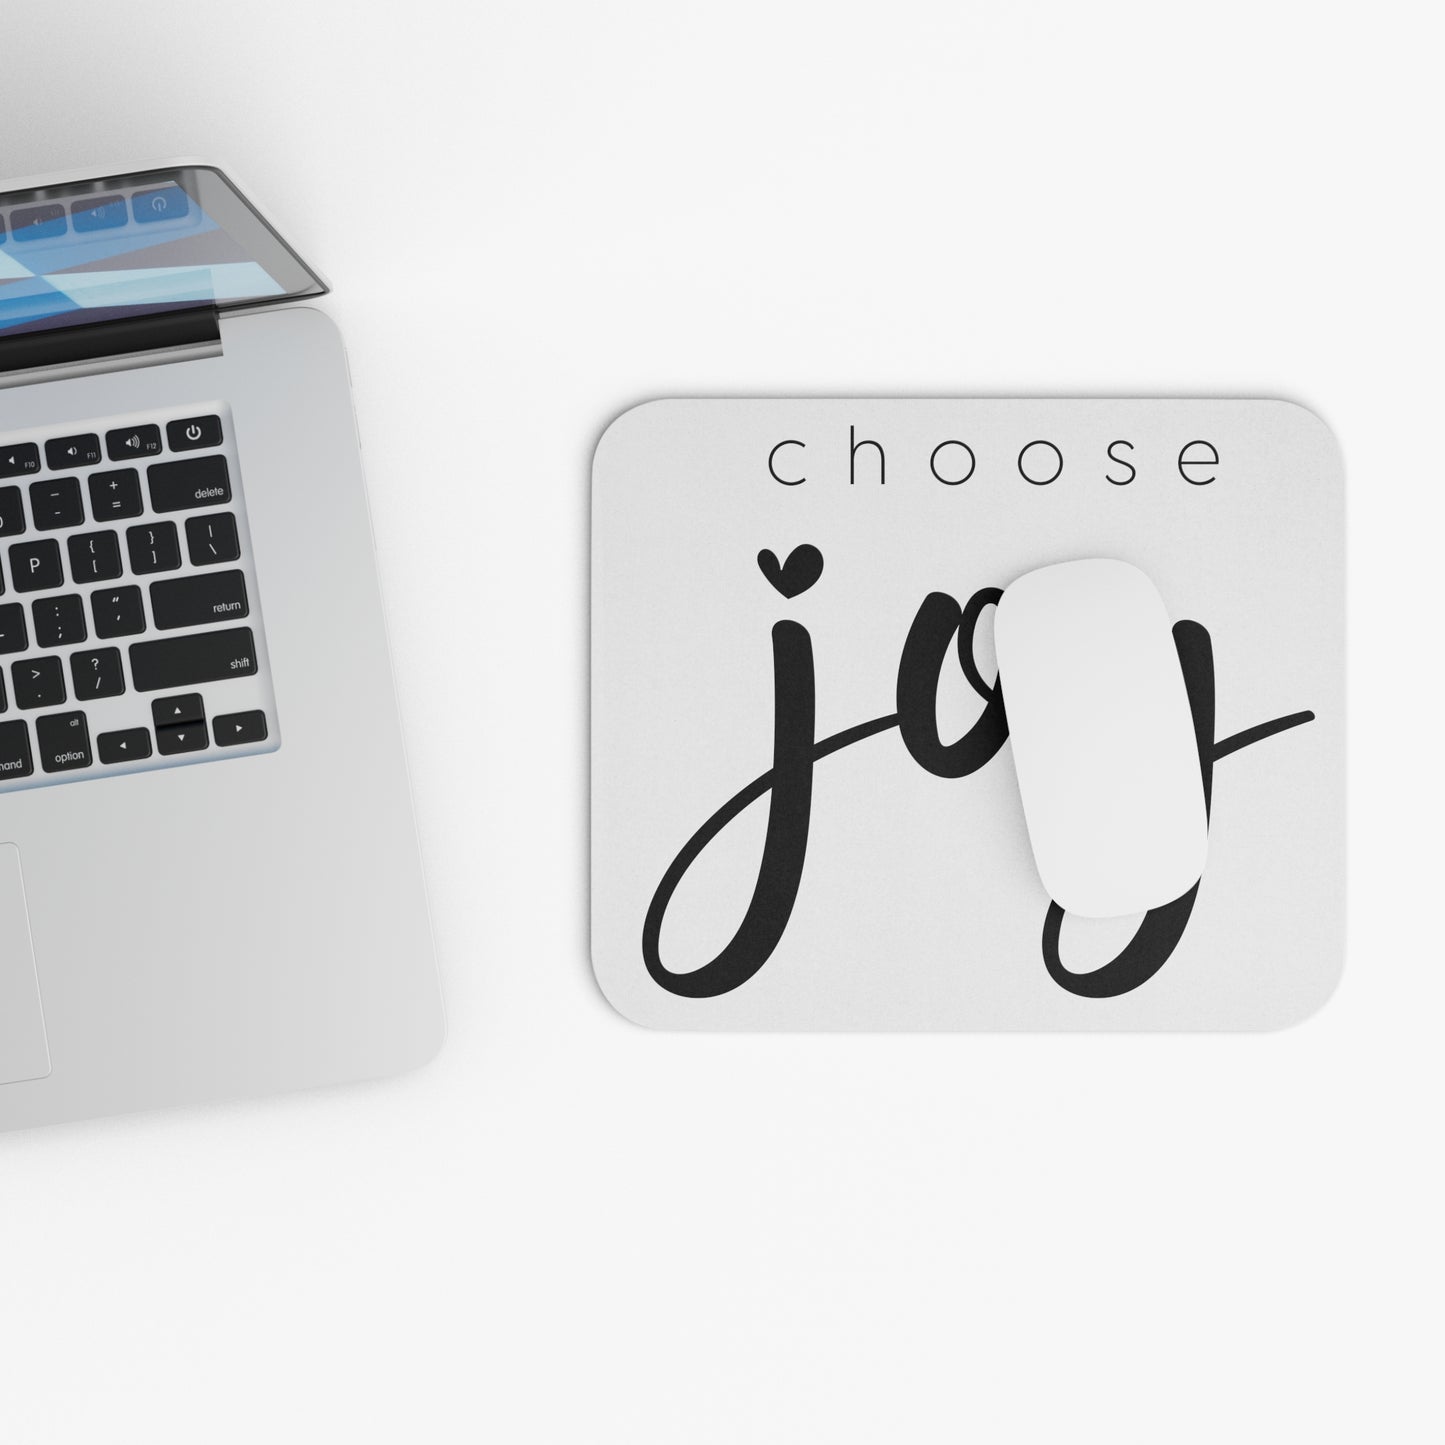 Choose Joy Mouse Pad, Christian Mouse Pad, Faith Mouse Pad